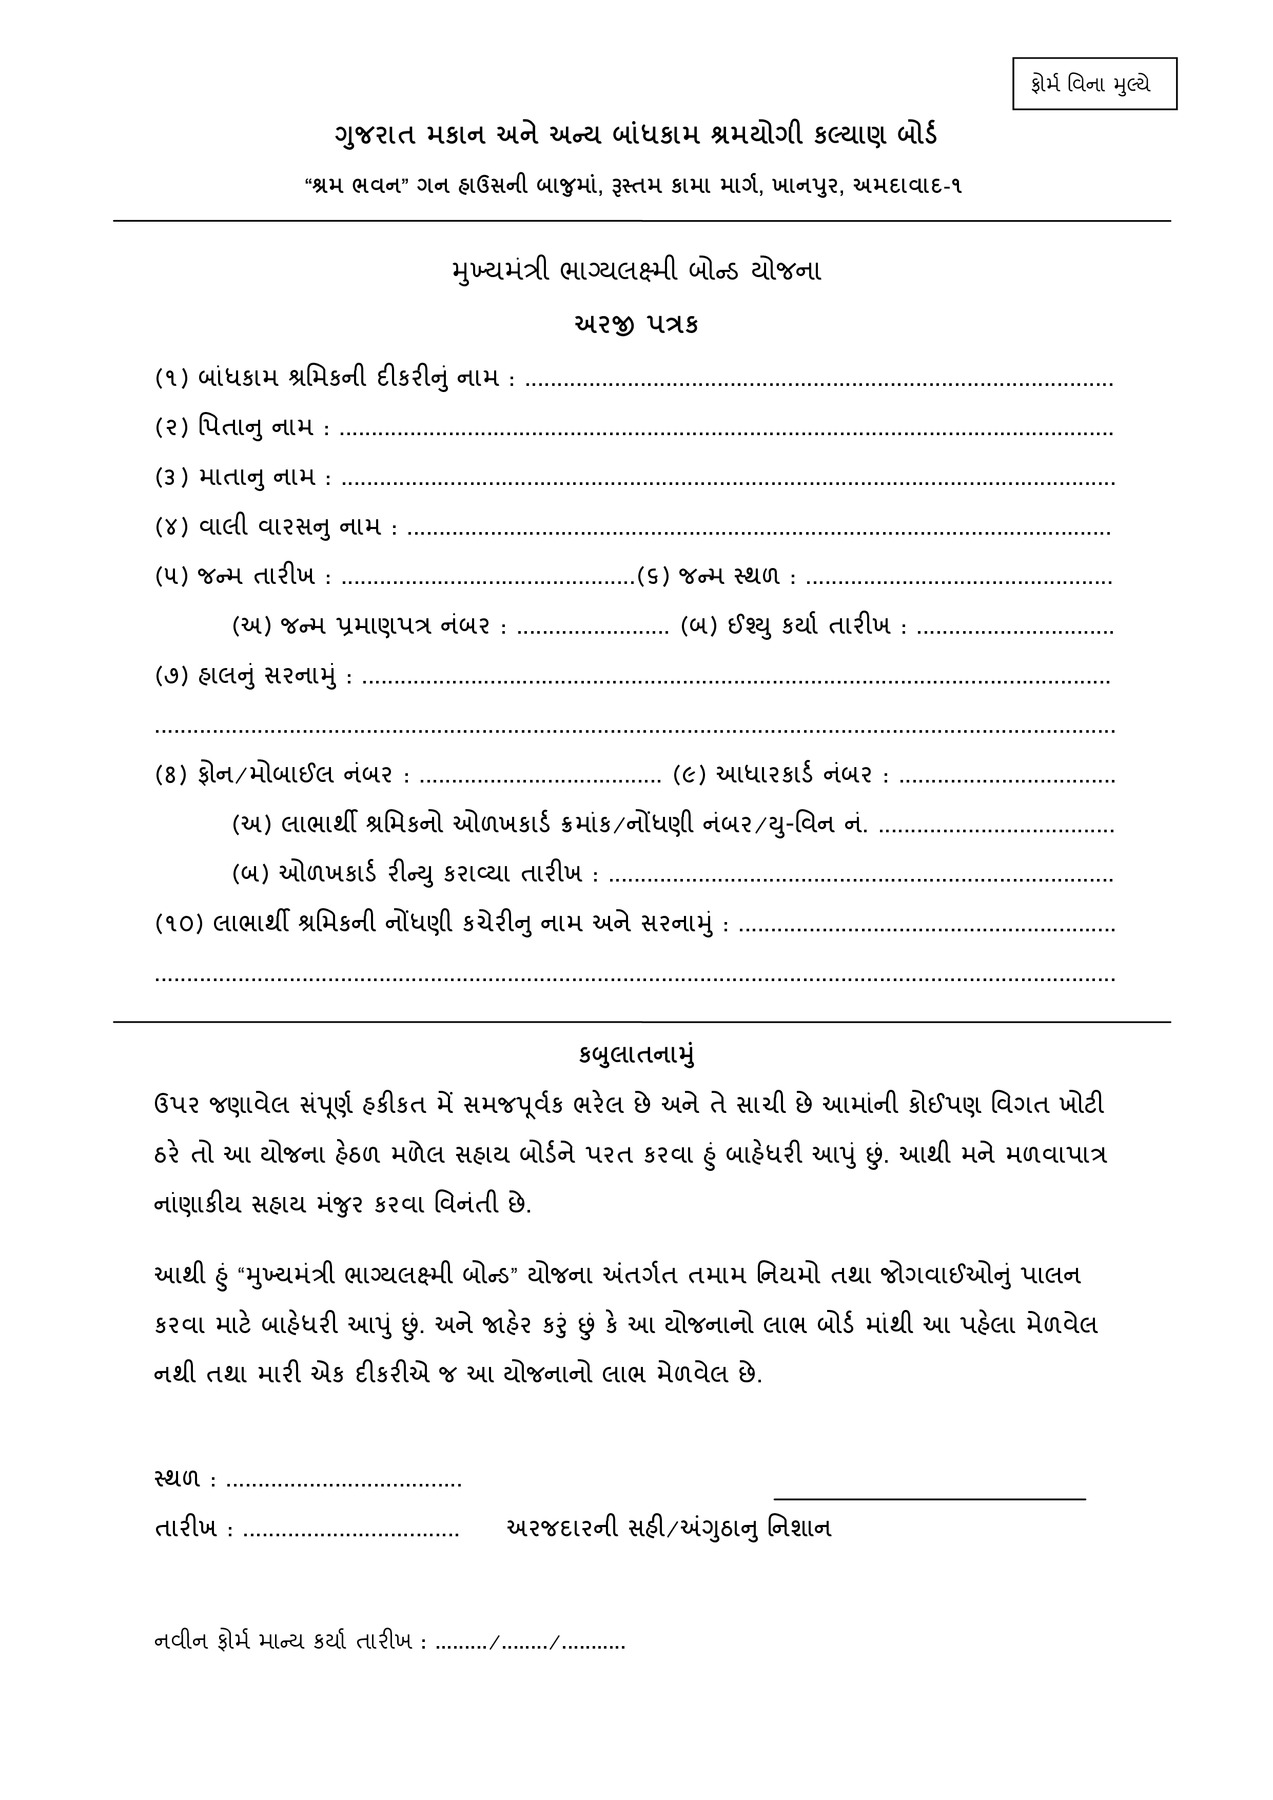 Mukhyamantri Bhagyalaxmi Bond Yojana 2022 Application Form PDF